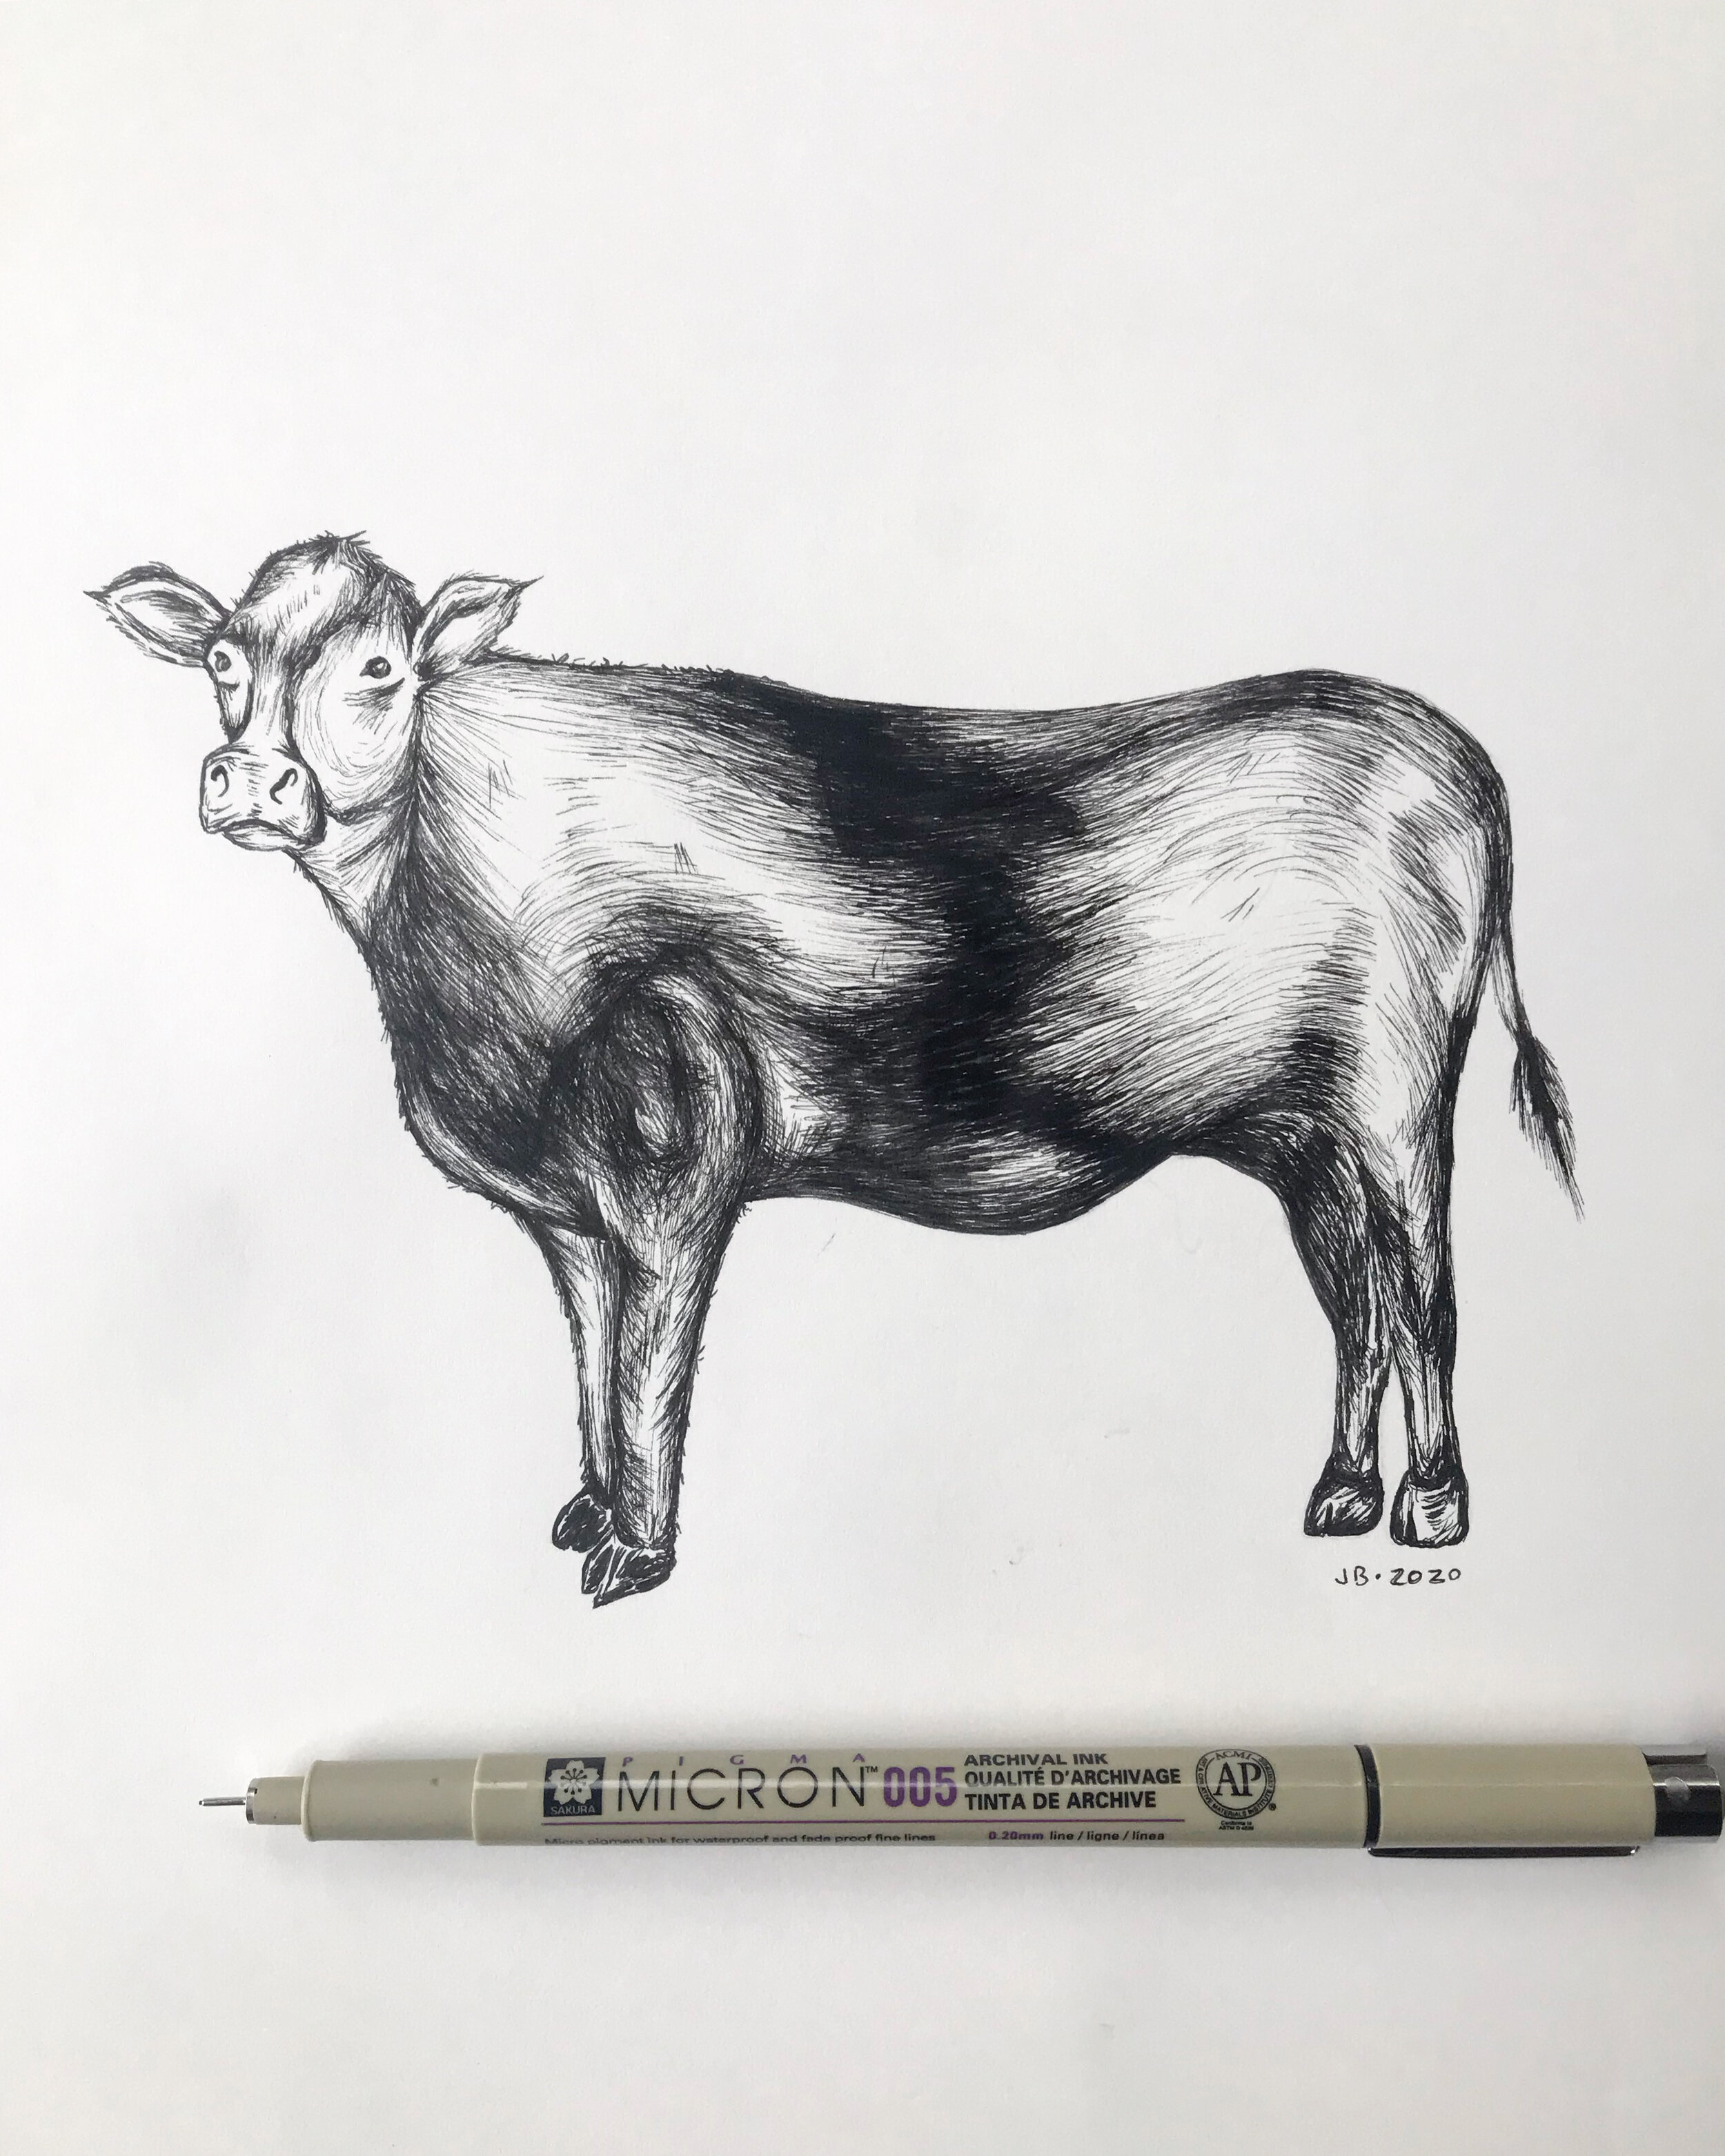 How to Draw a Cow (Farm Animals) Step by Step | DrawingTutorials101.com